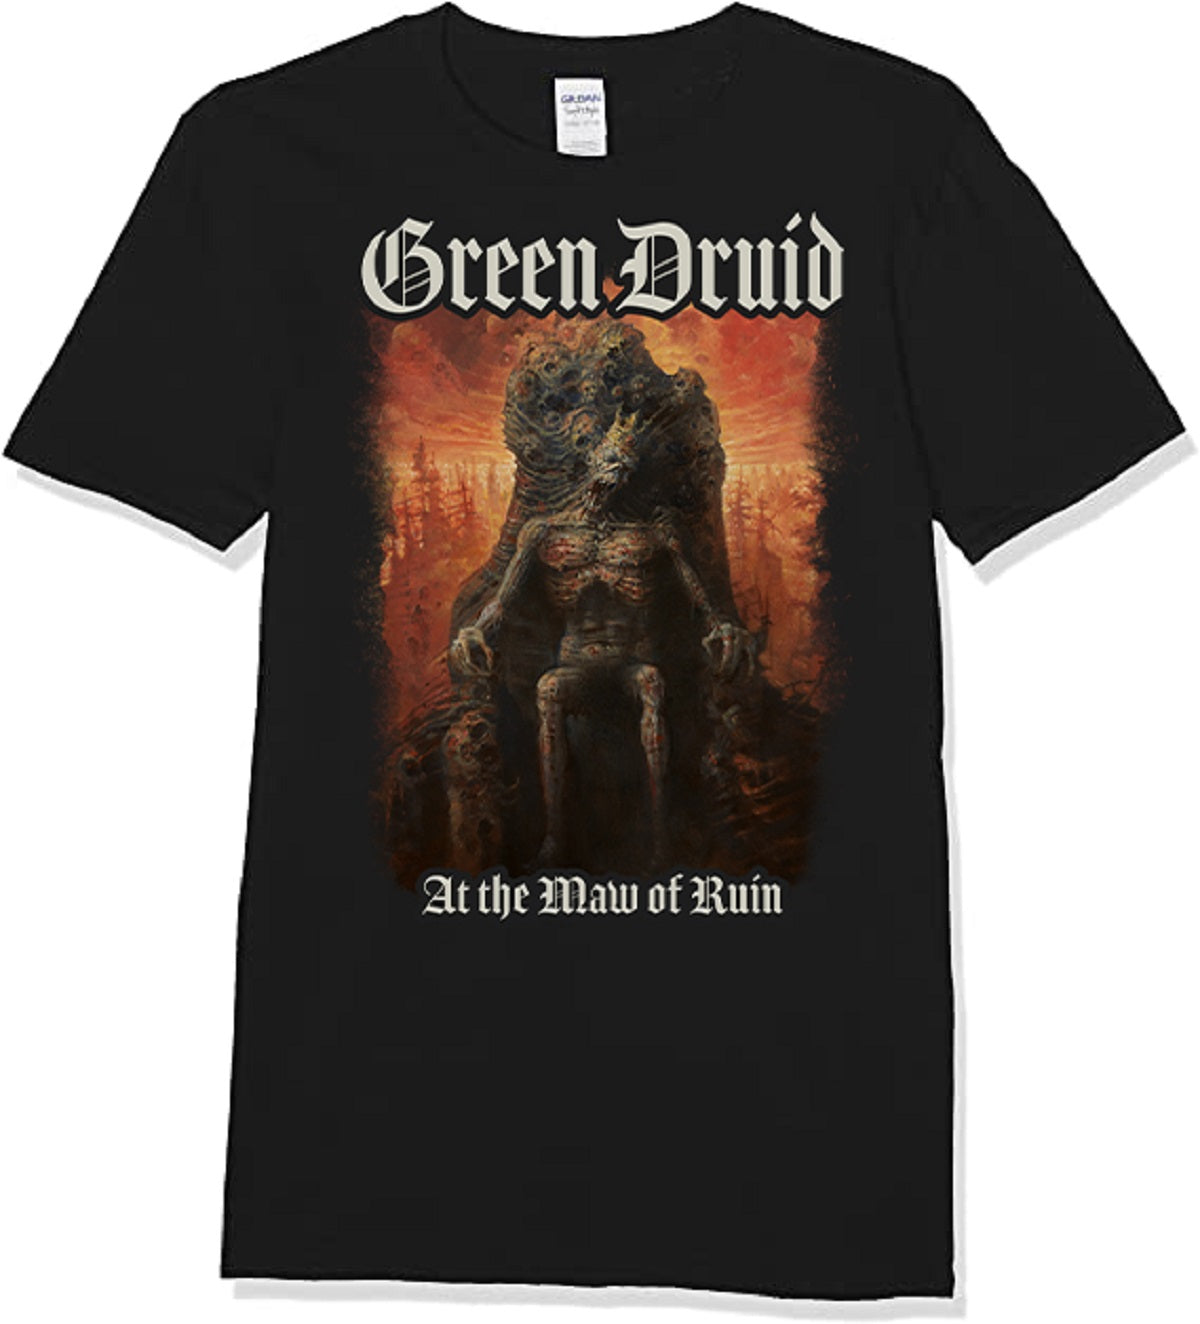 Green Druid "At The Maw Of Ruin" T shirt